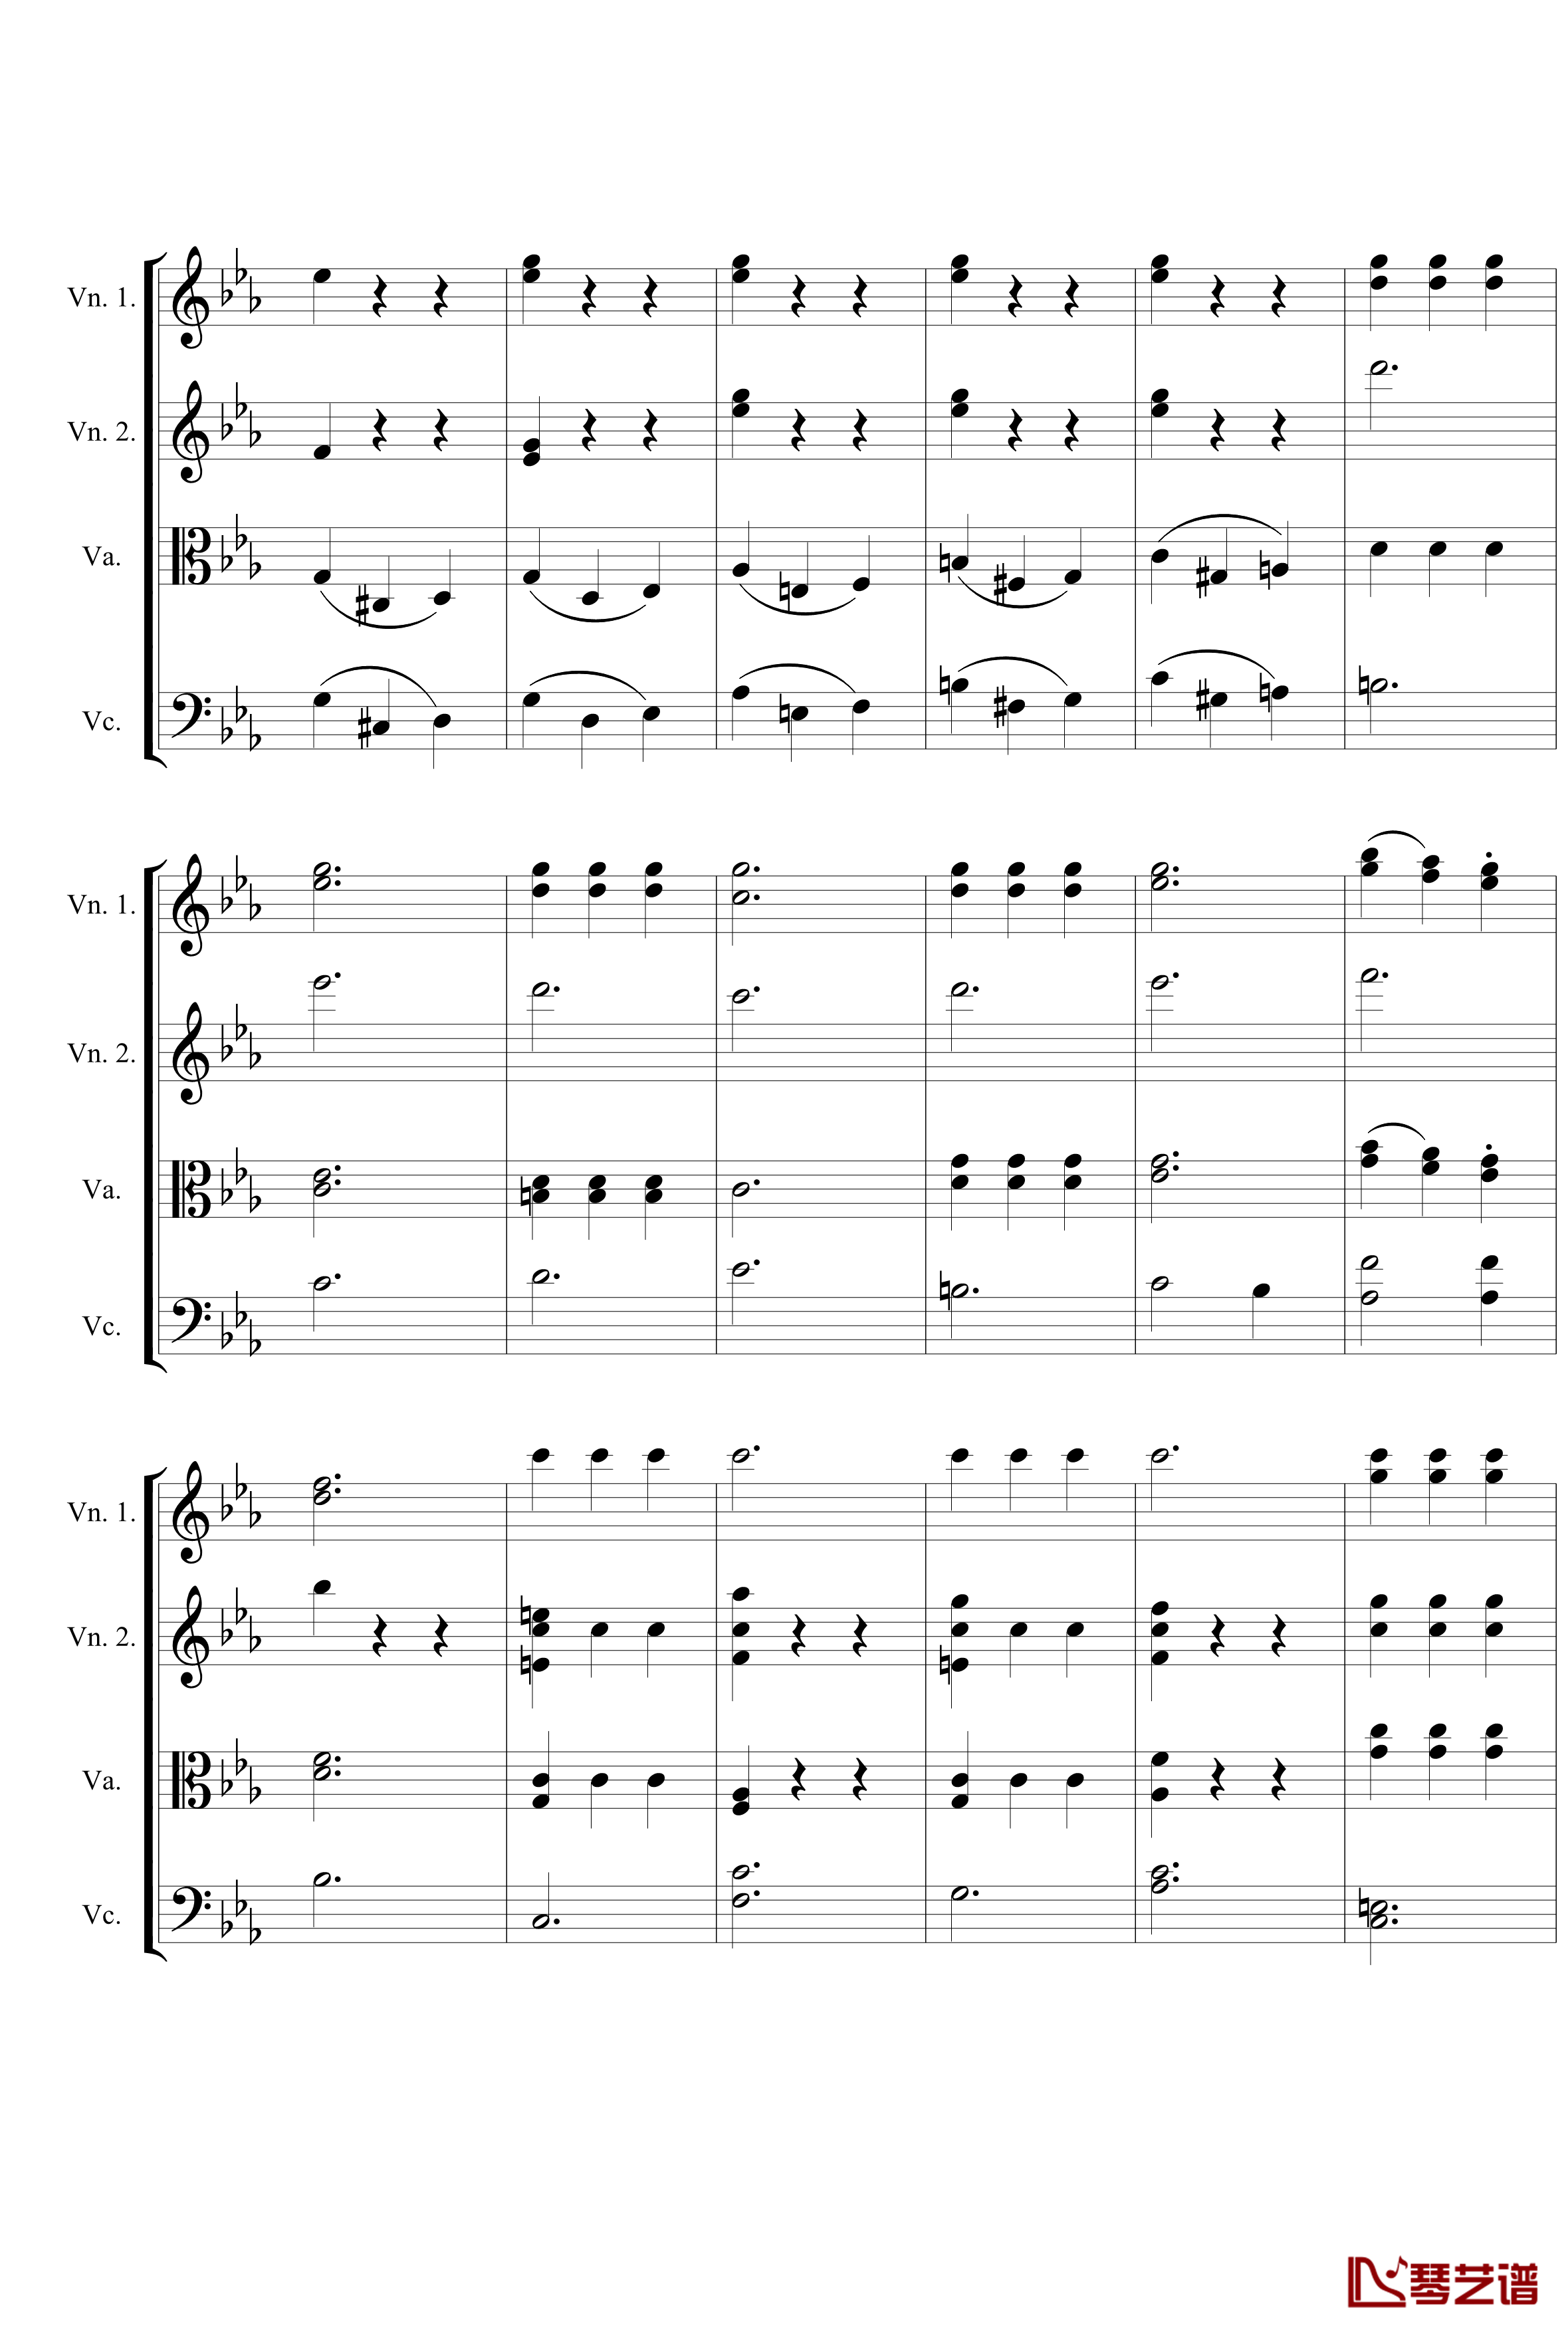 Symphony No.5 in C Minor 3rd钢琴谱-String quartet-贝多芬-beethoven6